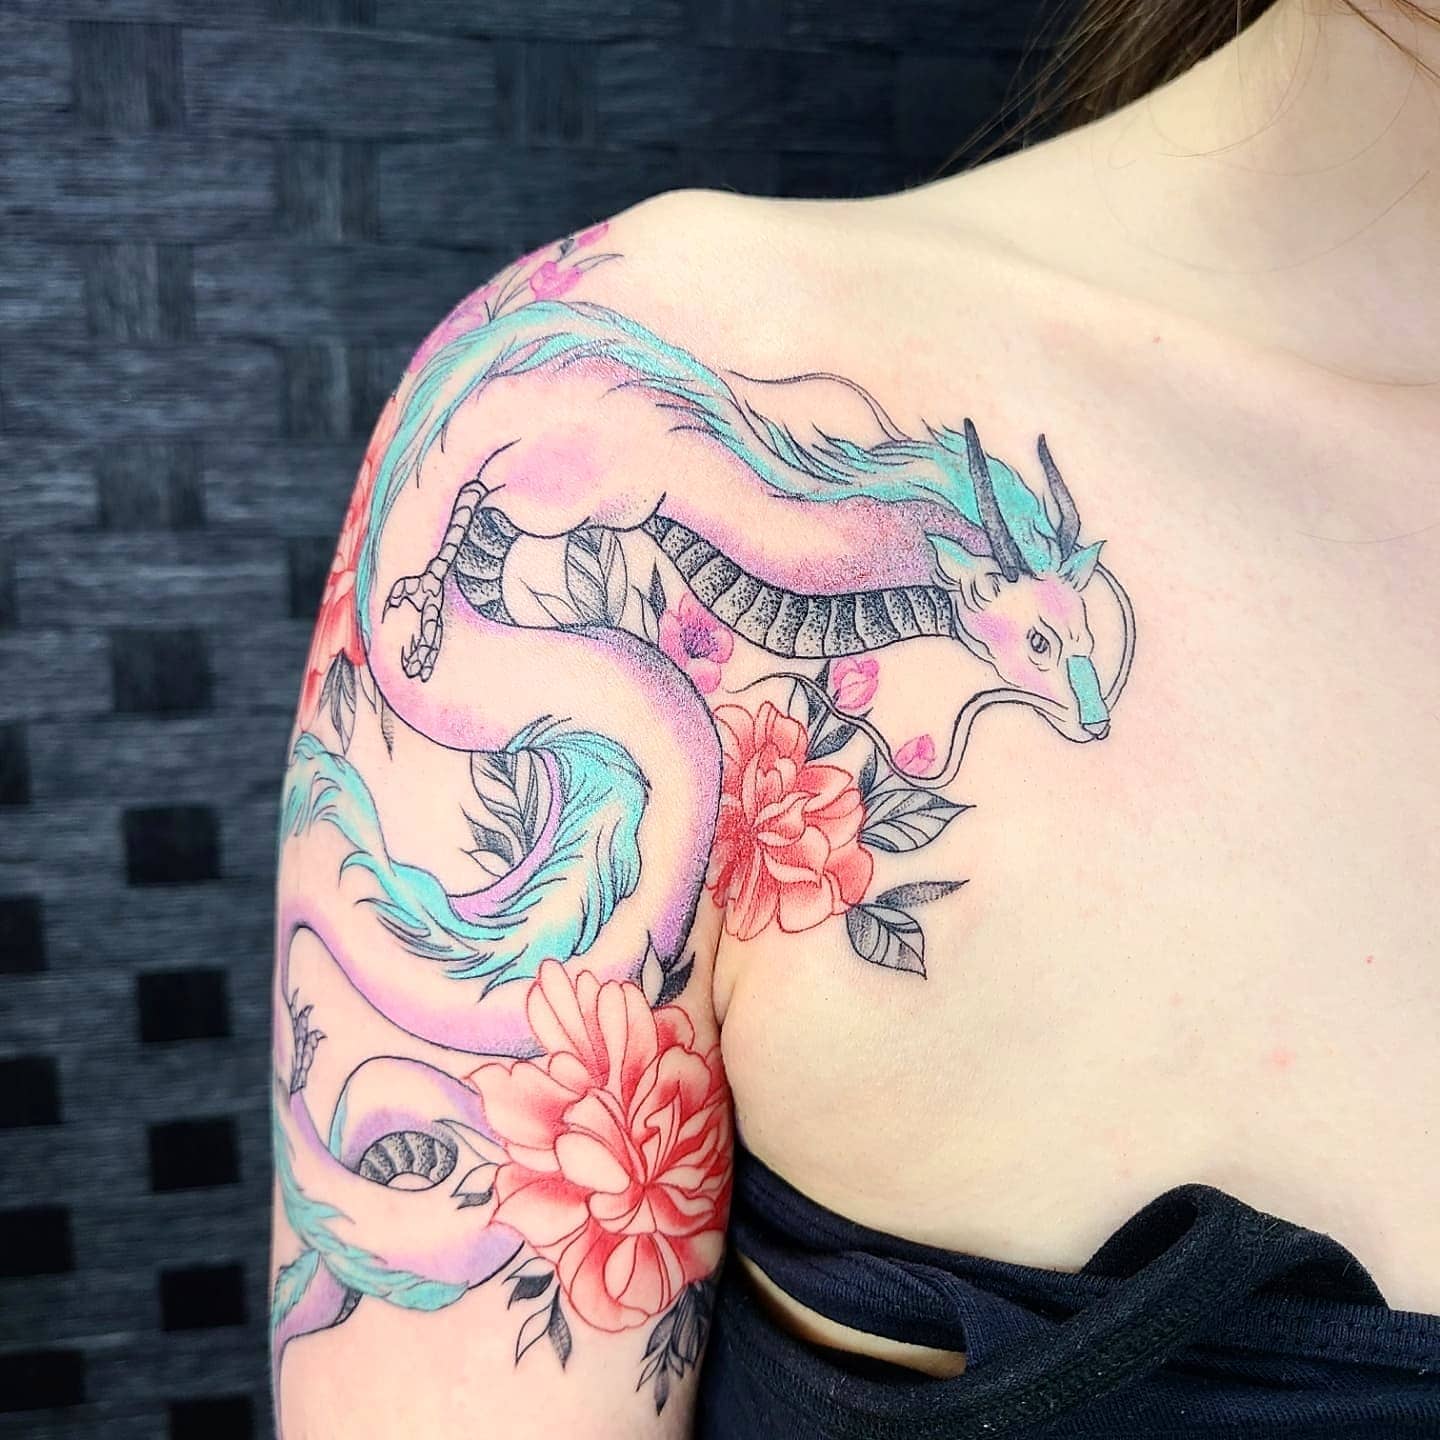 101 Best Women's Feminine Dragon Tattoo Ideas That Will Blow Your Mind